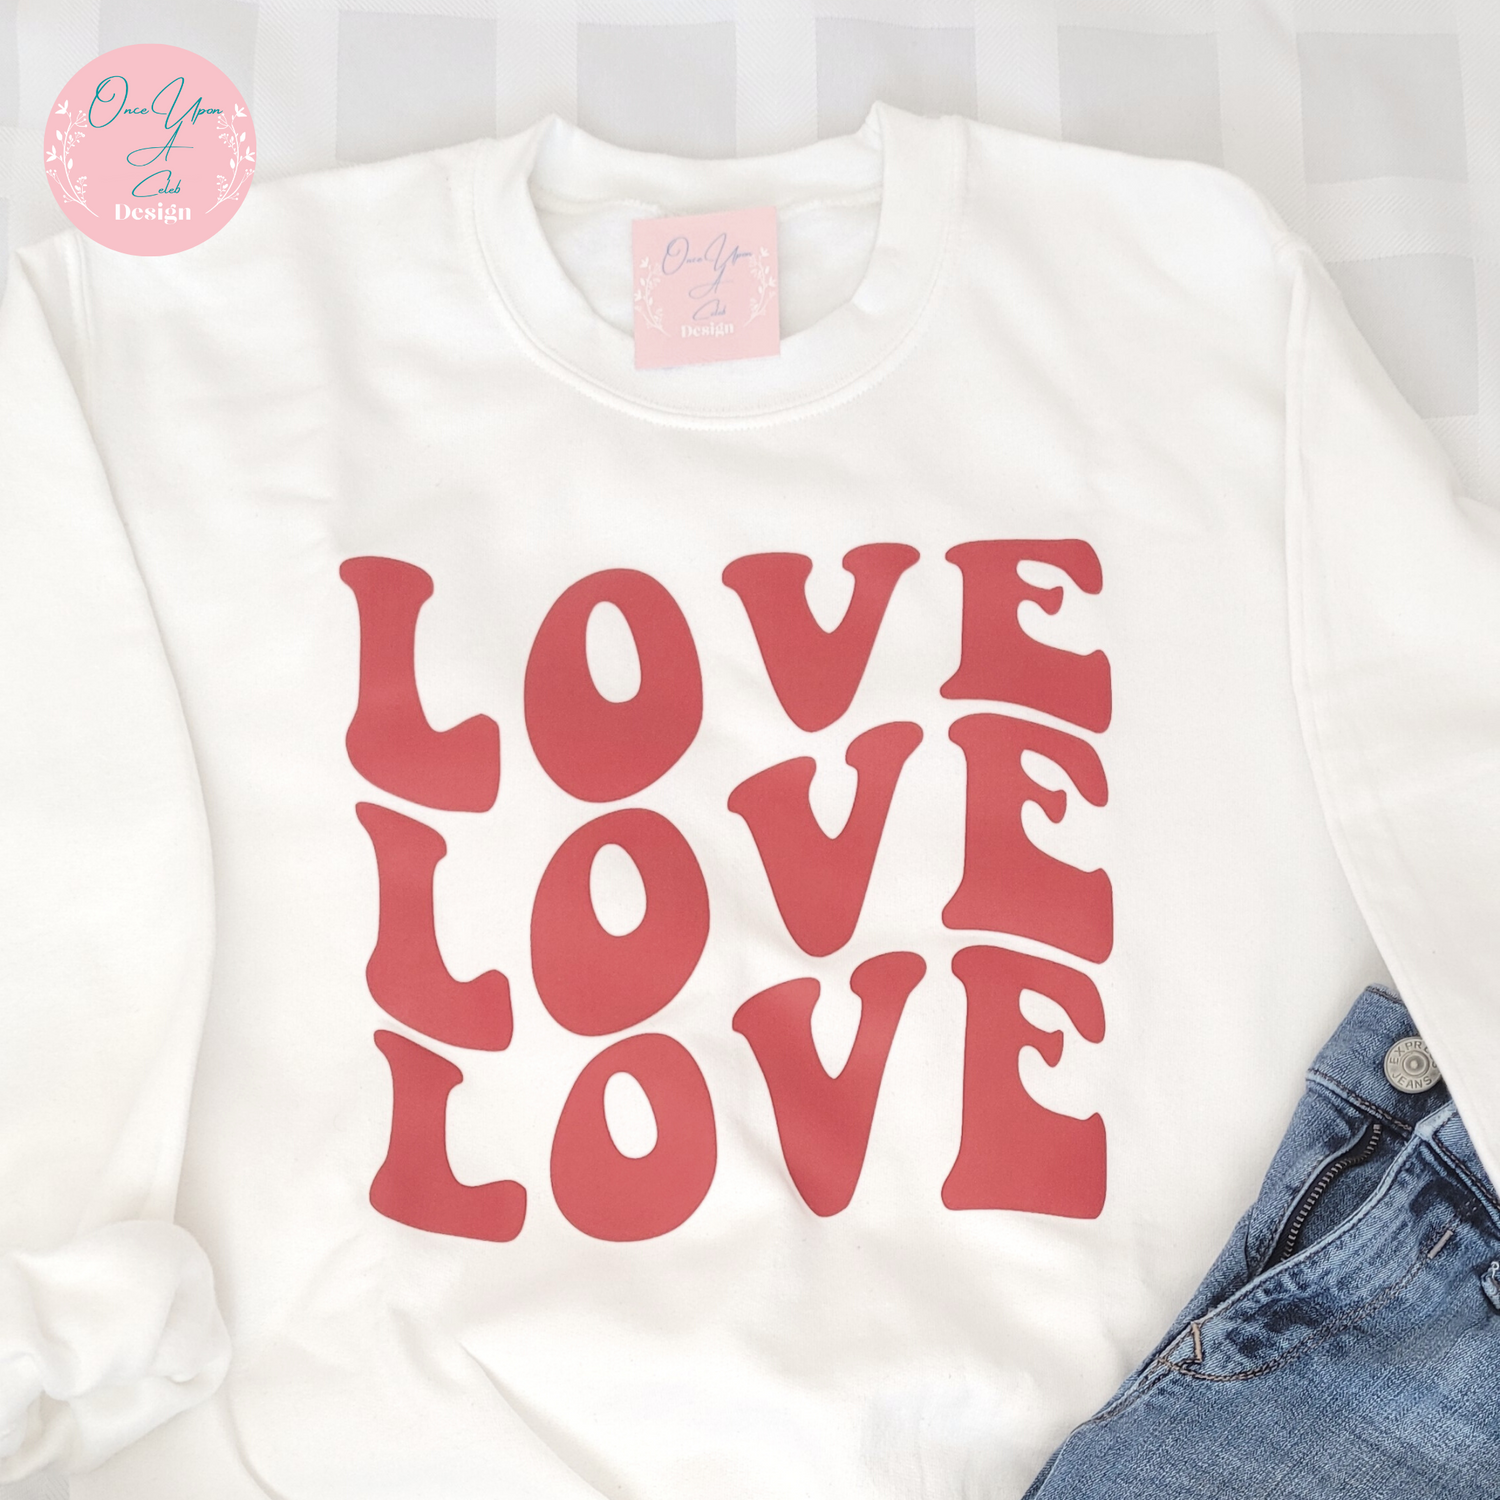 Retro Love Love Love T-shirt/Sweatshirt I By Once Upon A Celeb Design www.onceuponacelebdesign.com